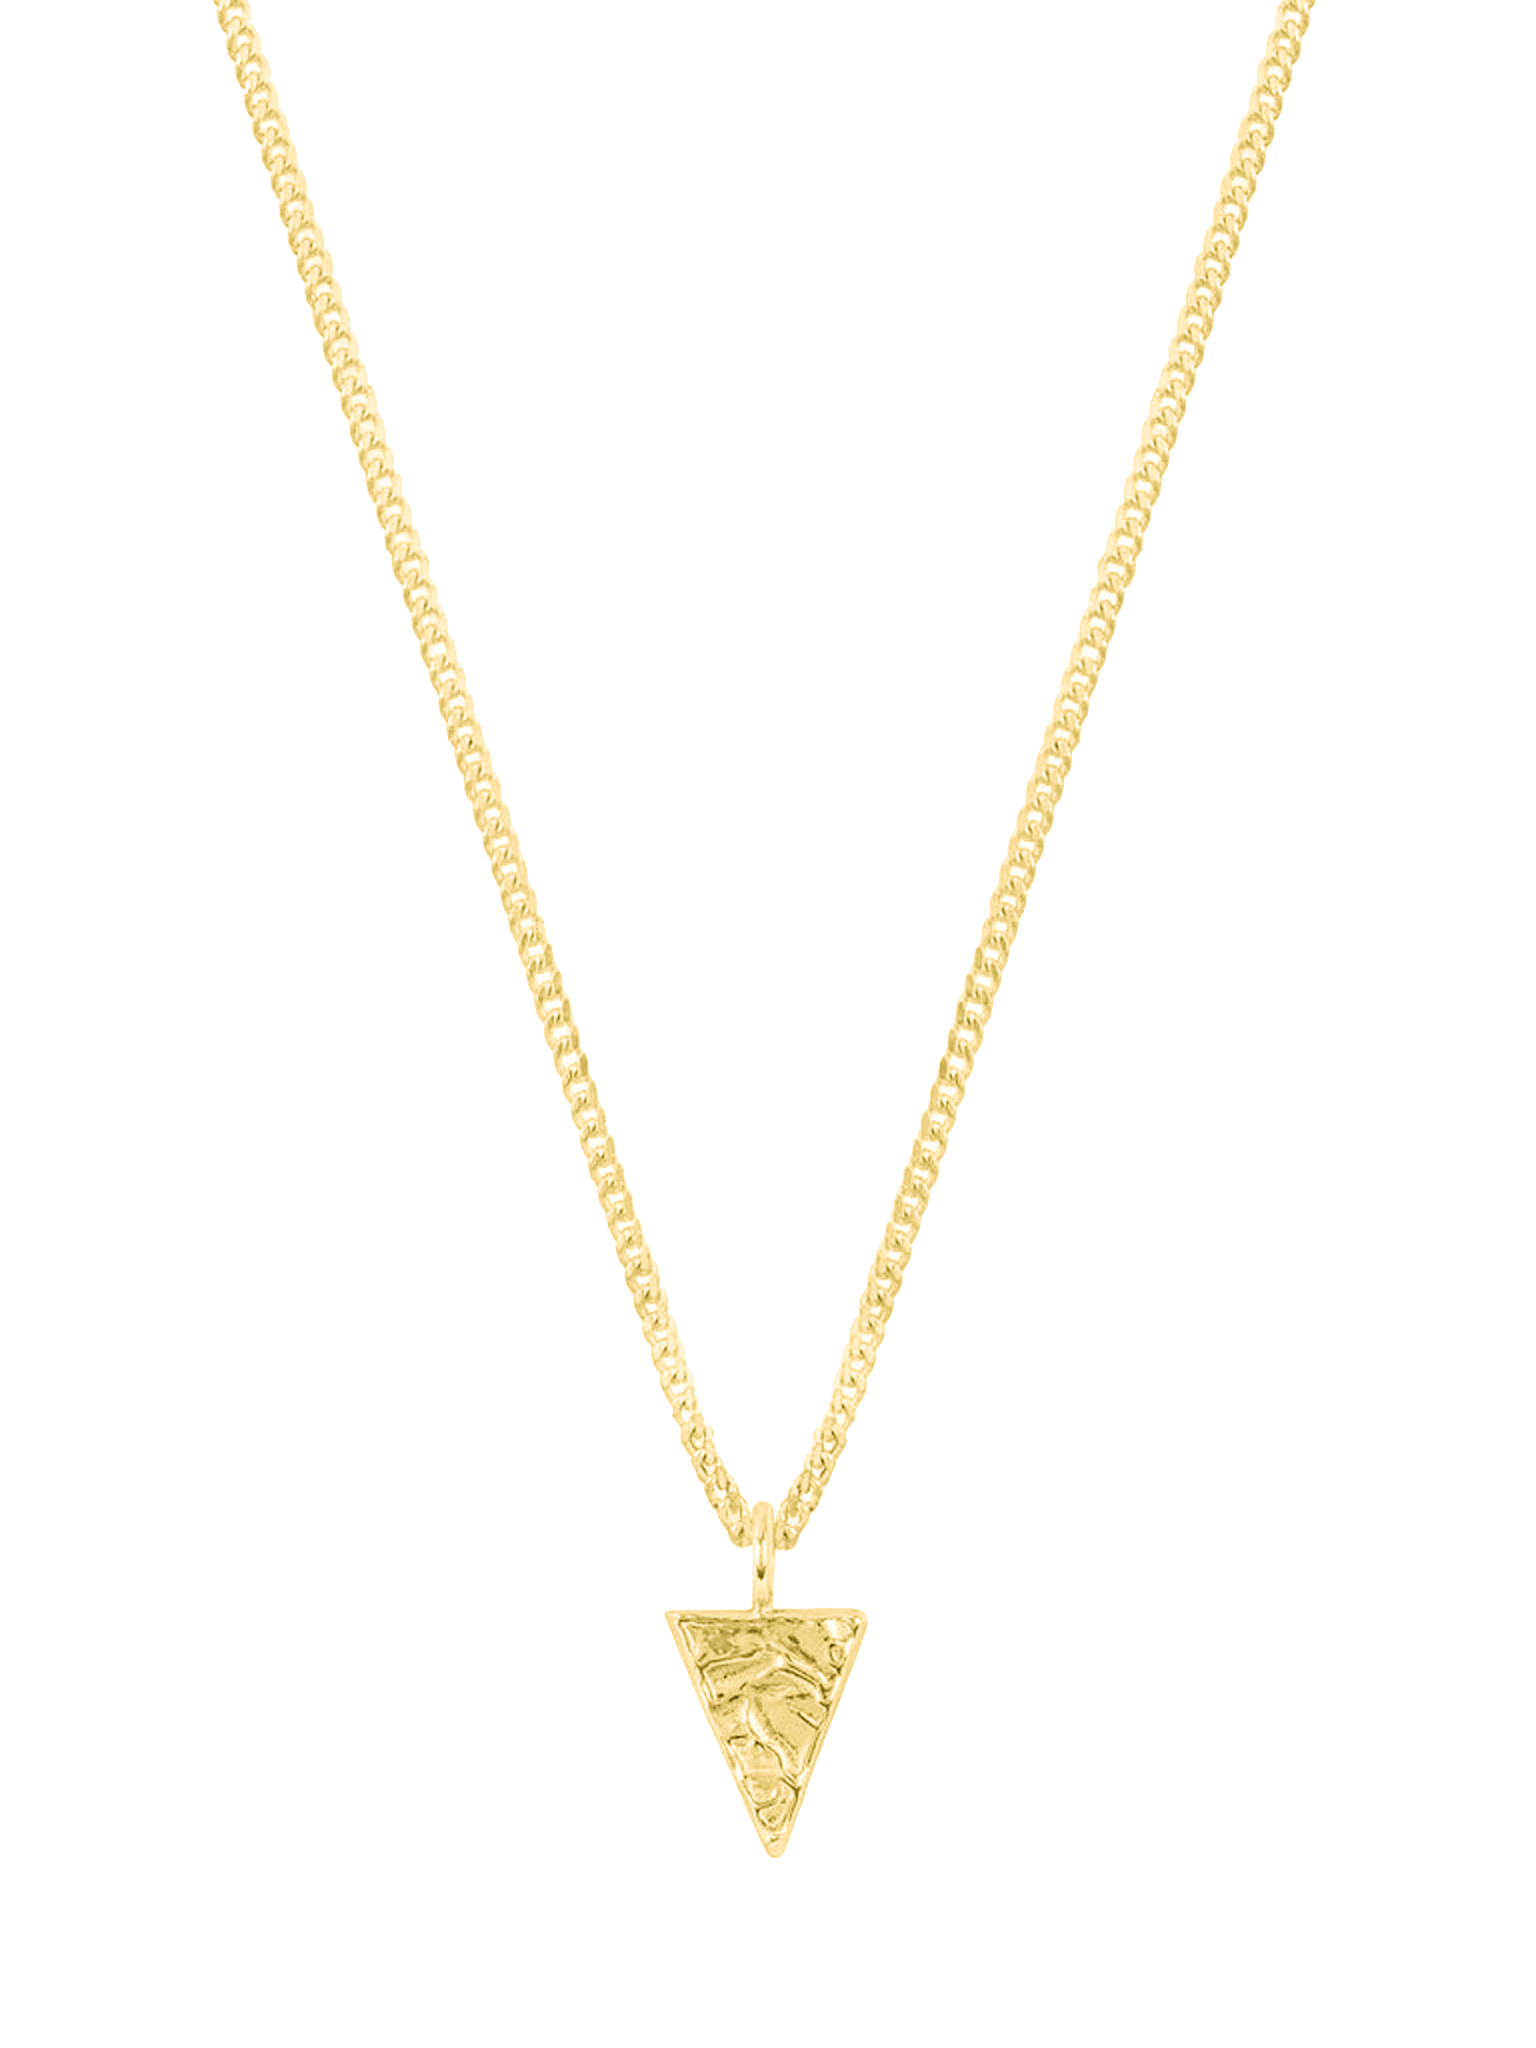 Organic triangle pendant necklace